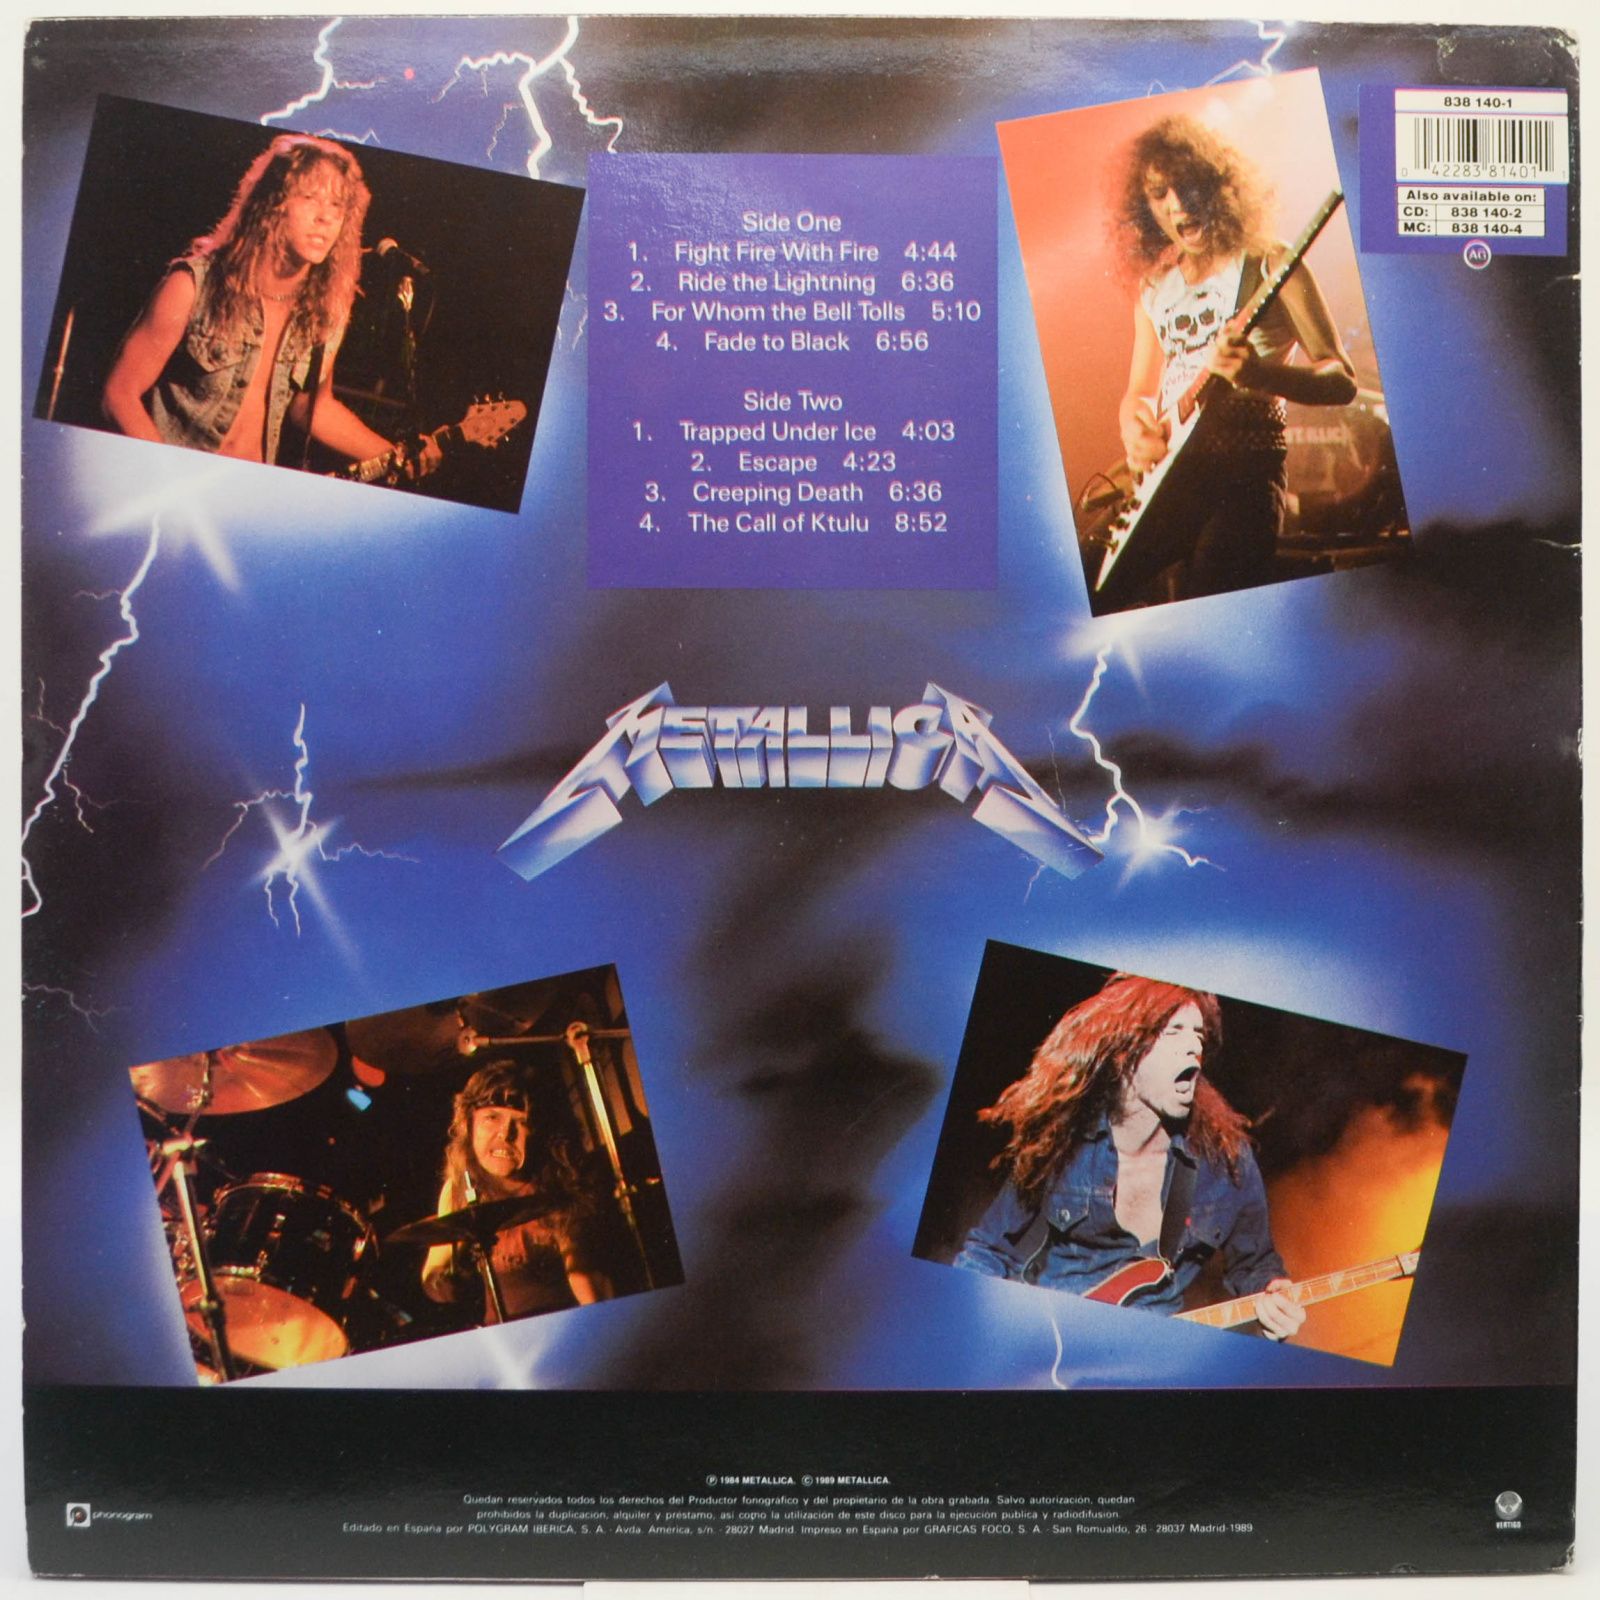 Metallica — Ride The Lightning, 1984